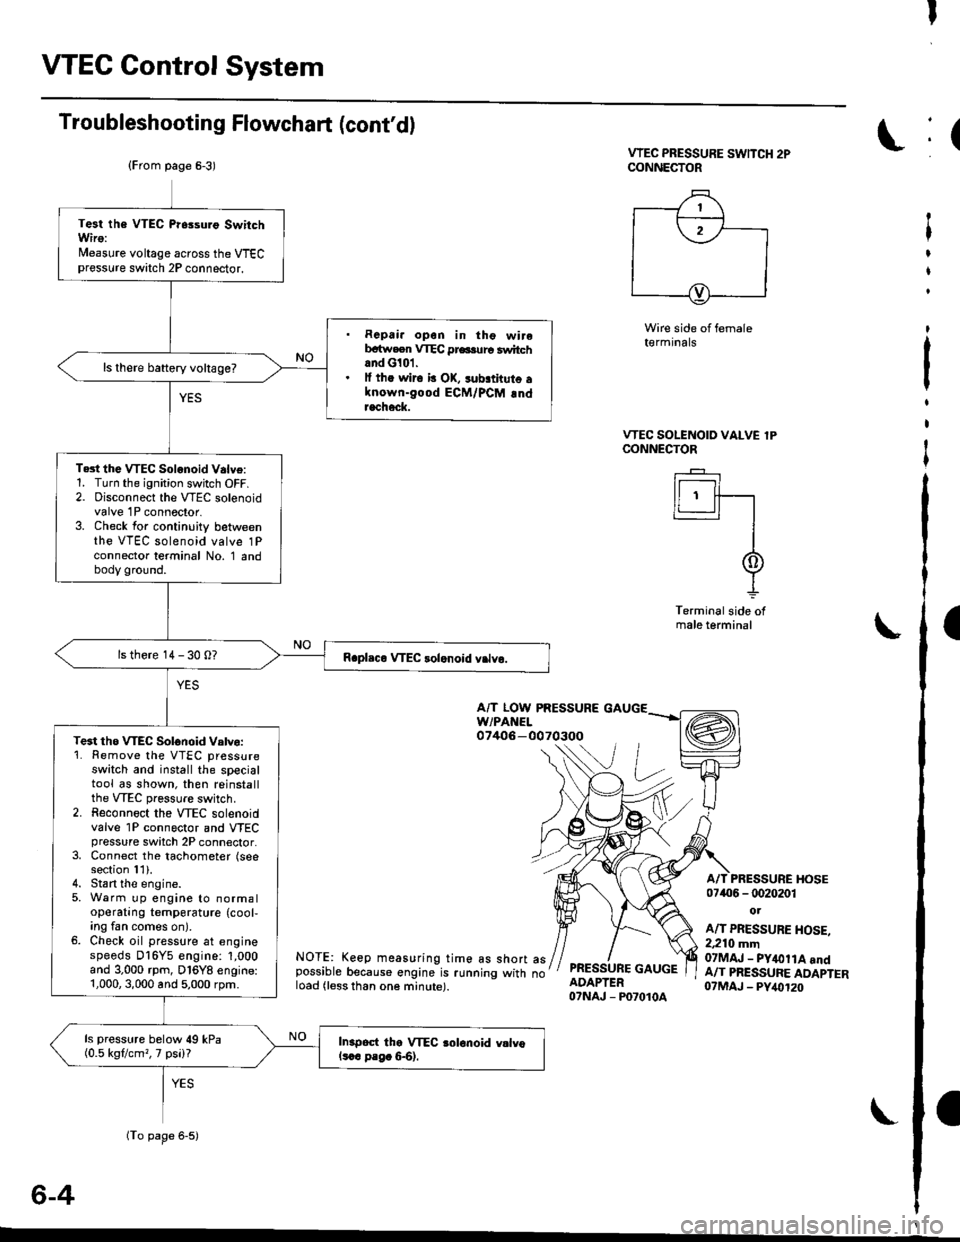 HONDA CIVIC 1999 6.G User Guide I
VTEC Control System
Troubleshooting Flowchart (contd)
VTEC PRESSURE SwlTCH 2PCONNECTOR
Wire side of female(€rmrnats
VTEC SOLENOID VALVE lPCONNECTOR
I r----t I
ll  ff---r�-�1
I
I
-L
Terminal s